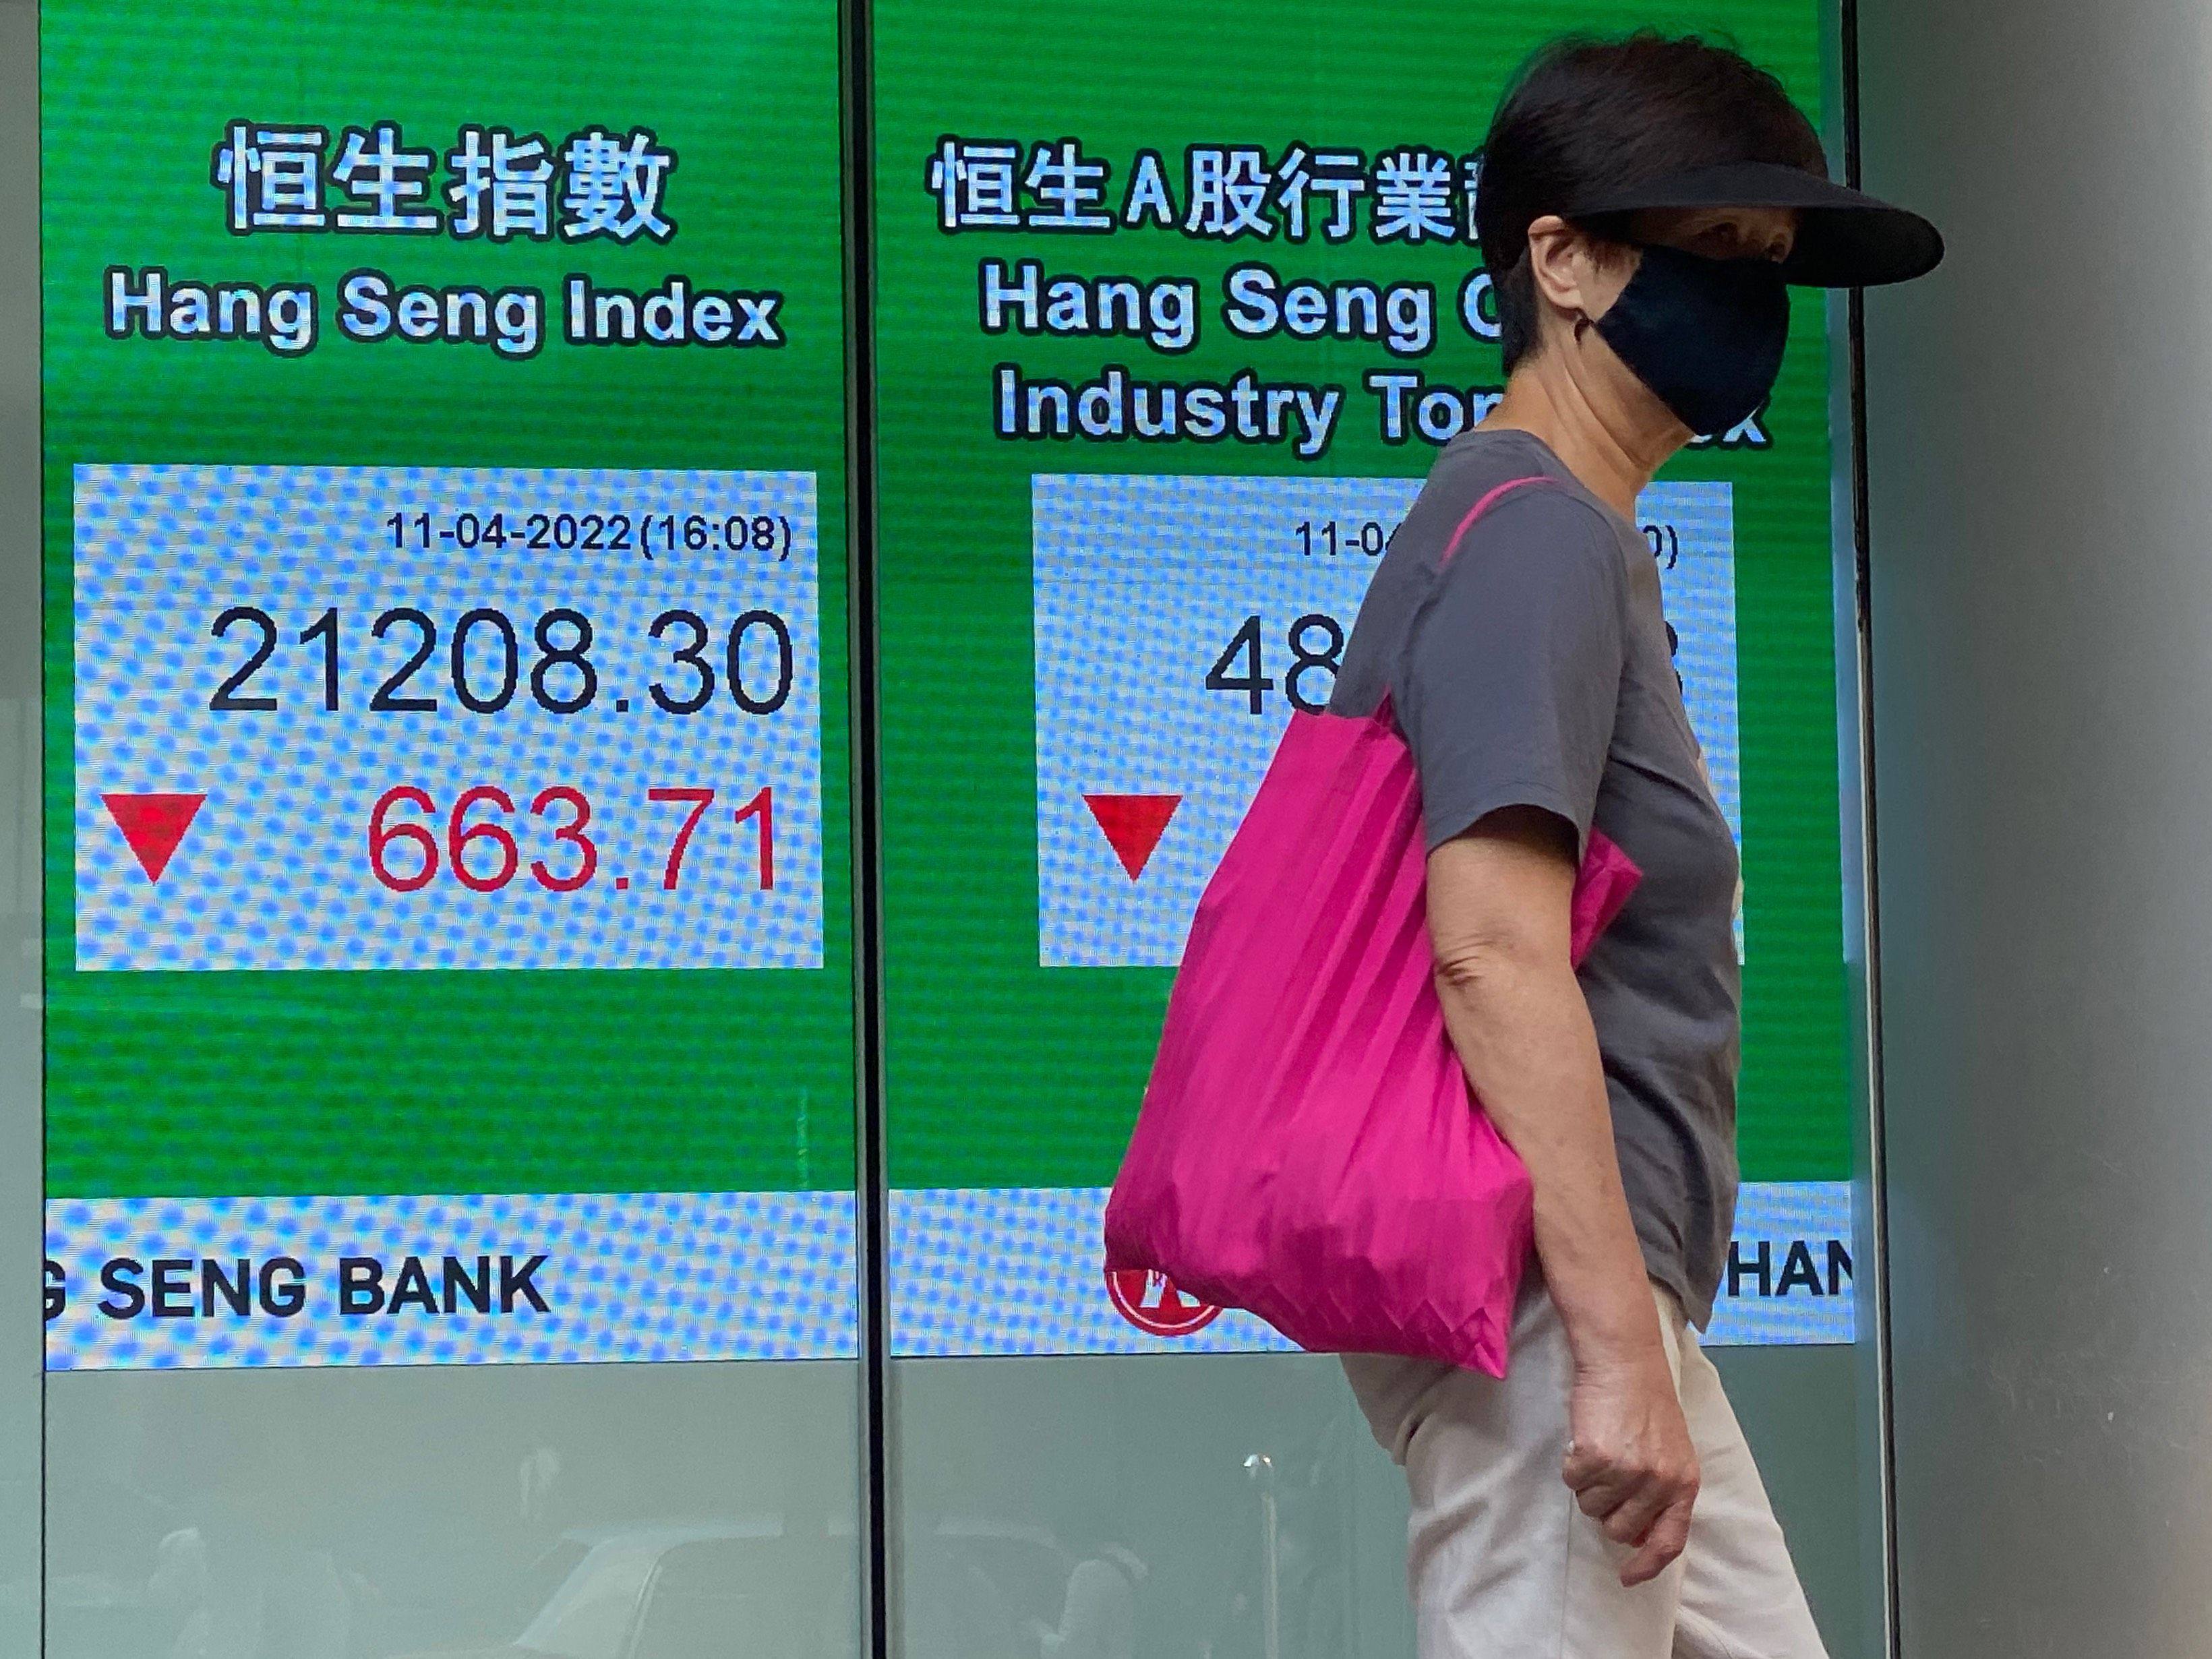 A woman walks past a sign showing the Hang Seng Index in Hong Kong on April 11. Photo AFP